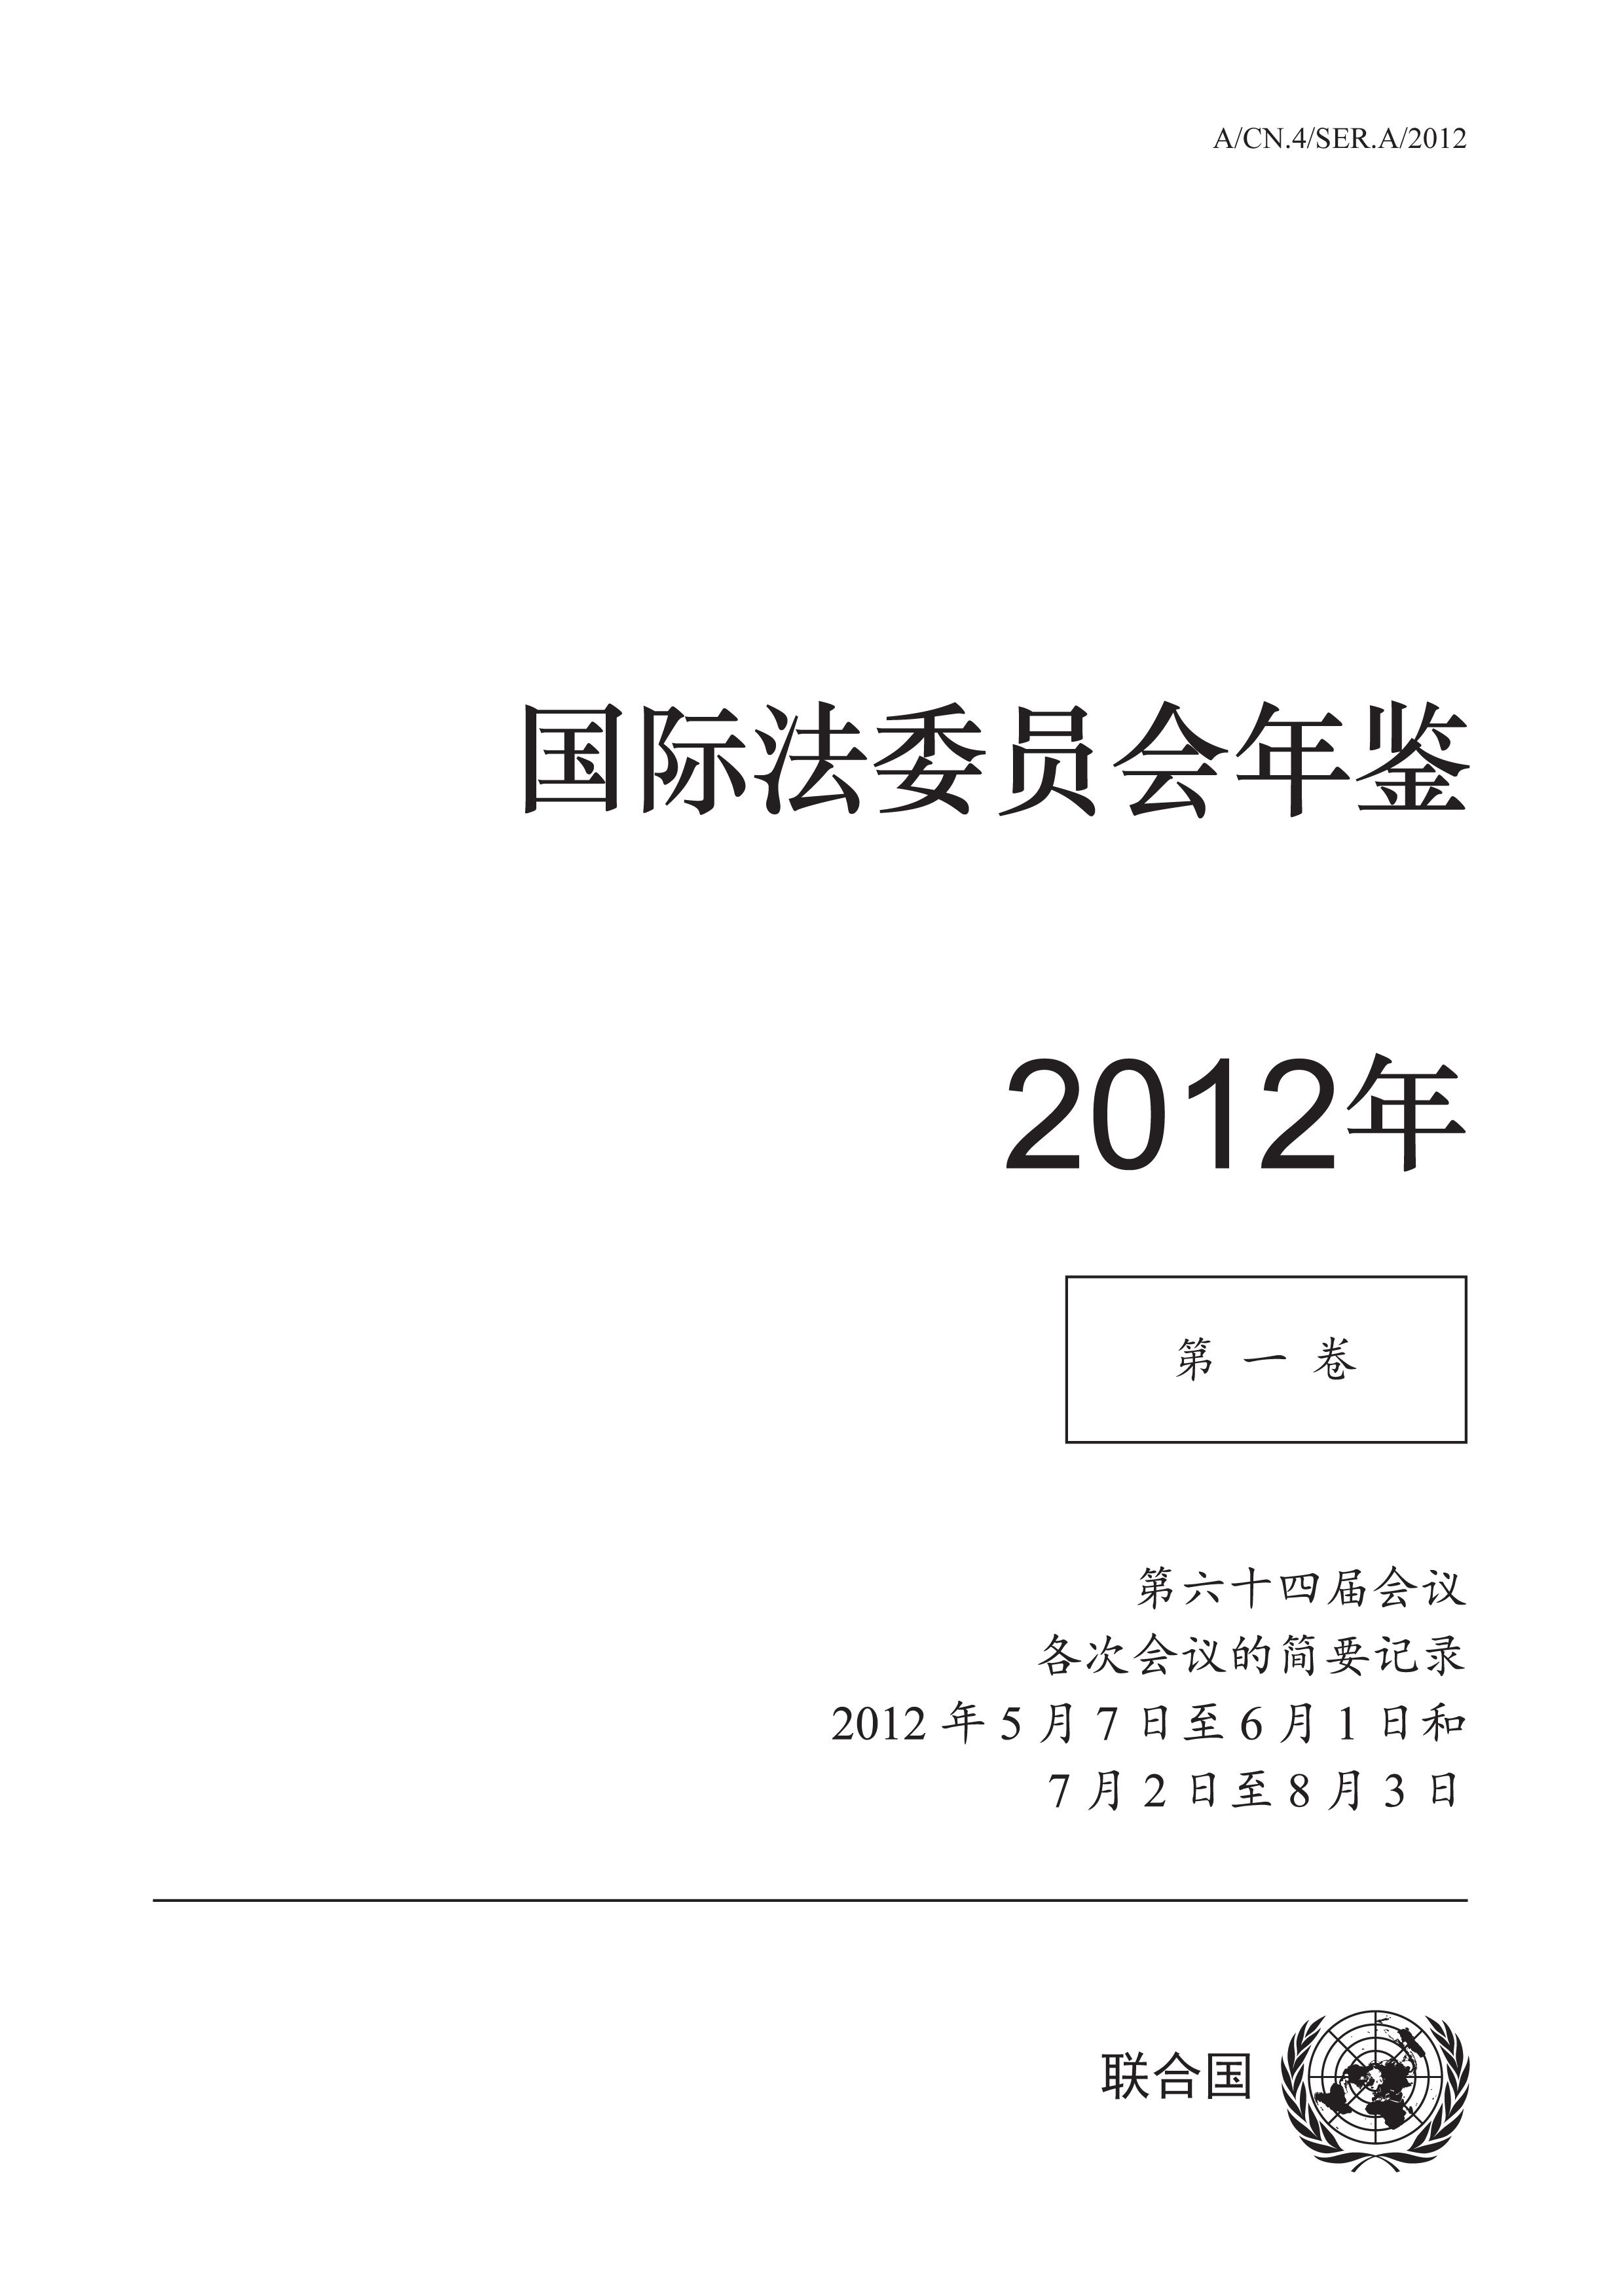 image of 国际法委员会年鉴 2012年, 第一卷